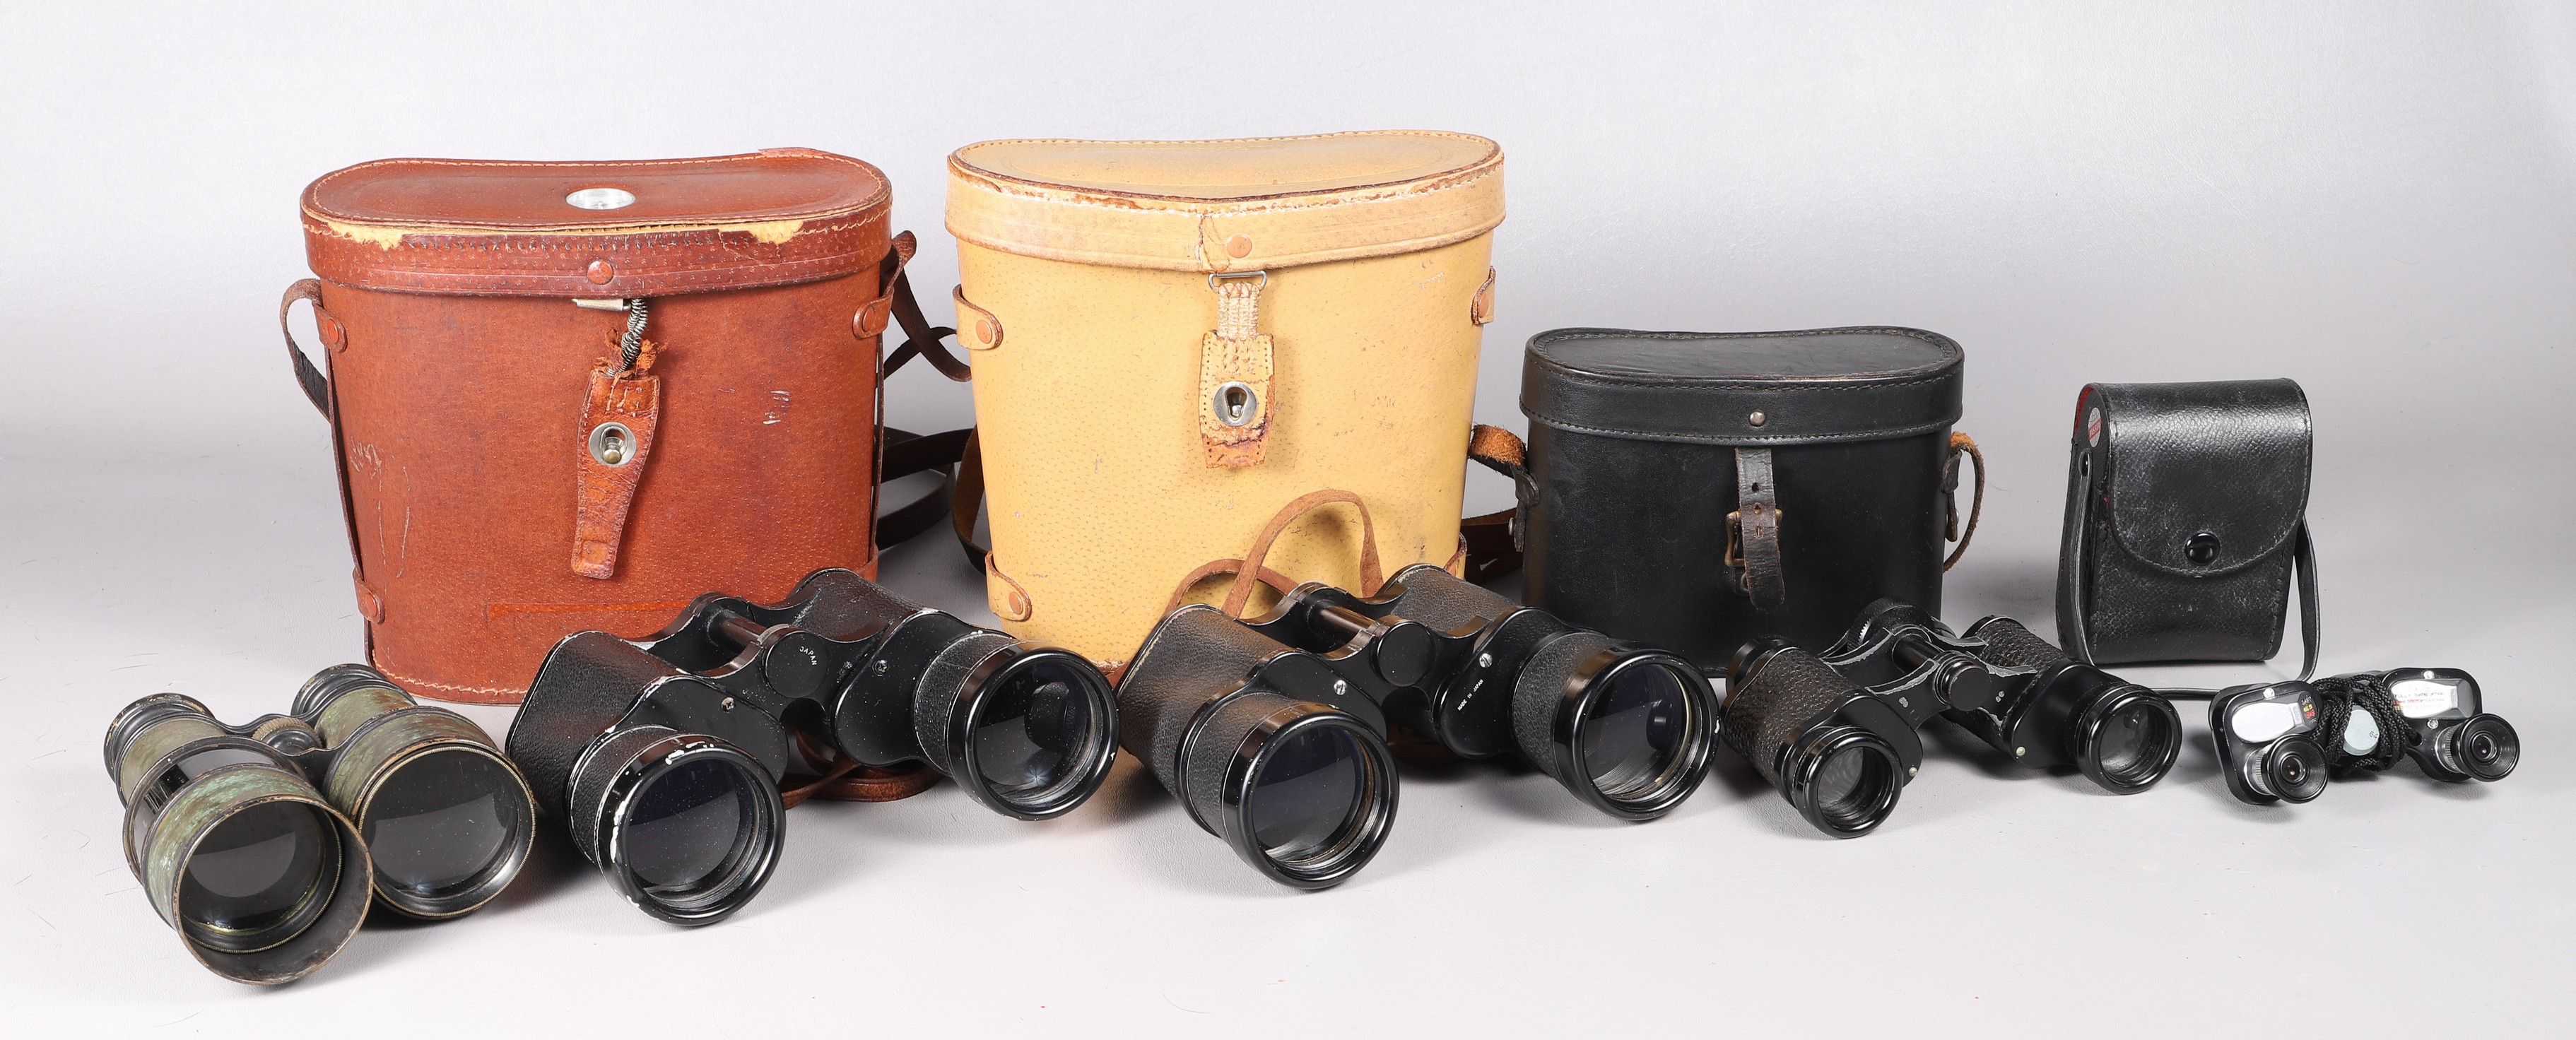 (5) Pair of binoculars, c/o Binolux